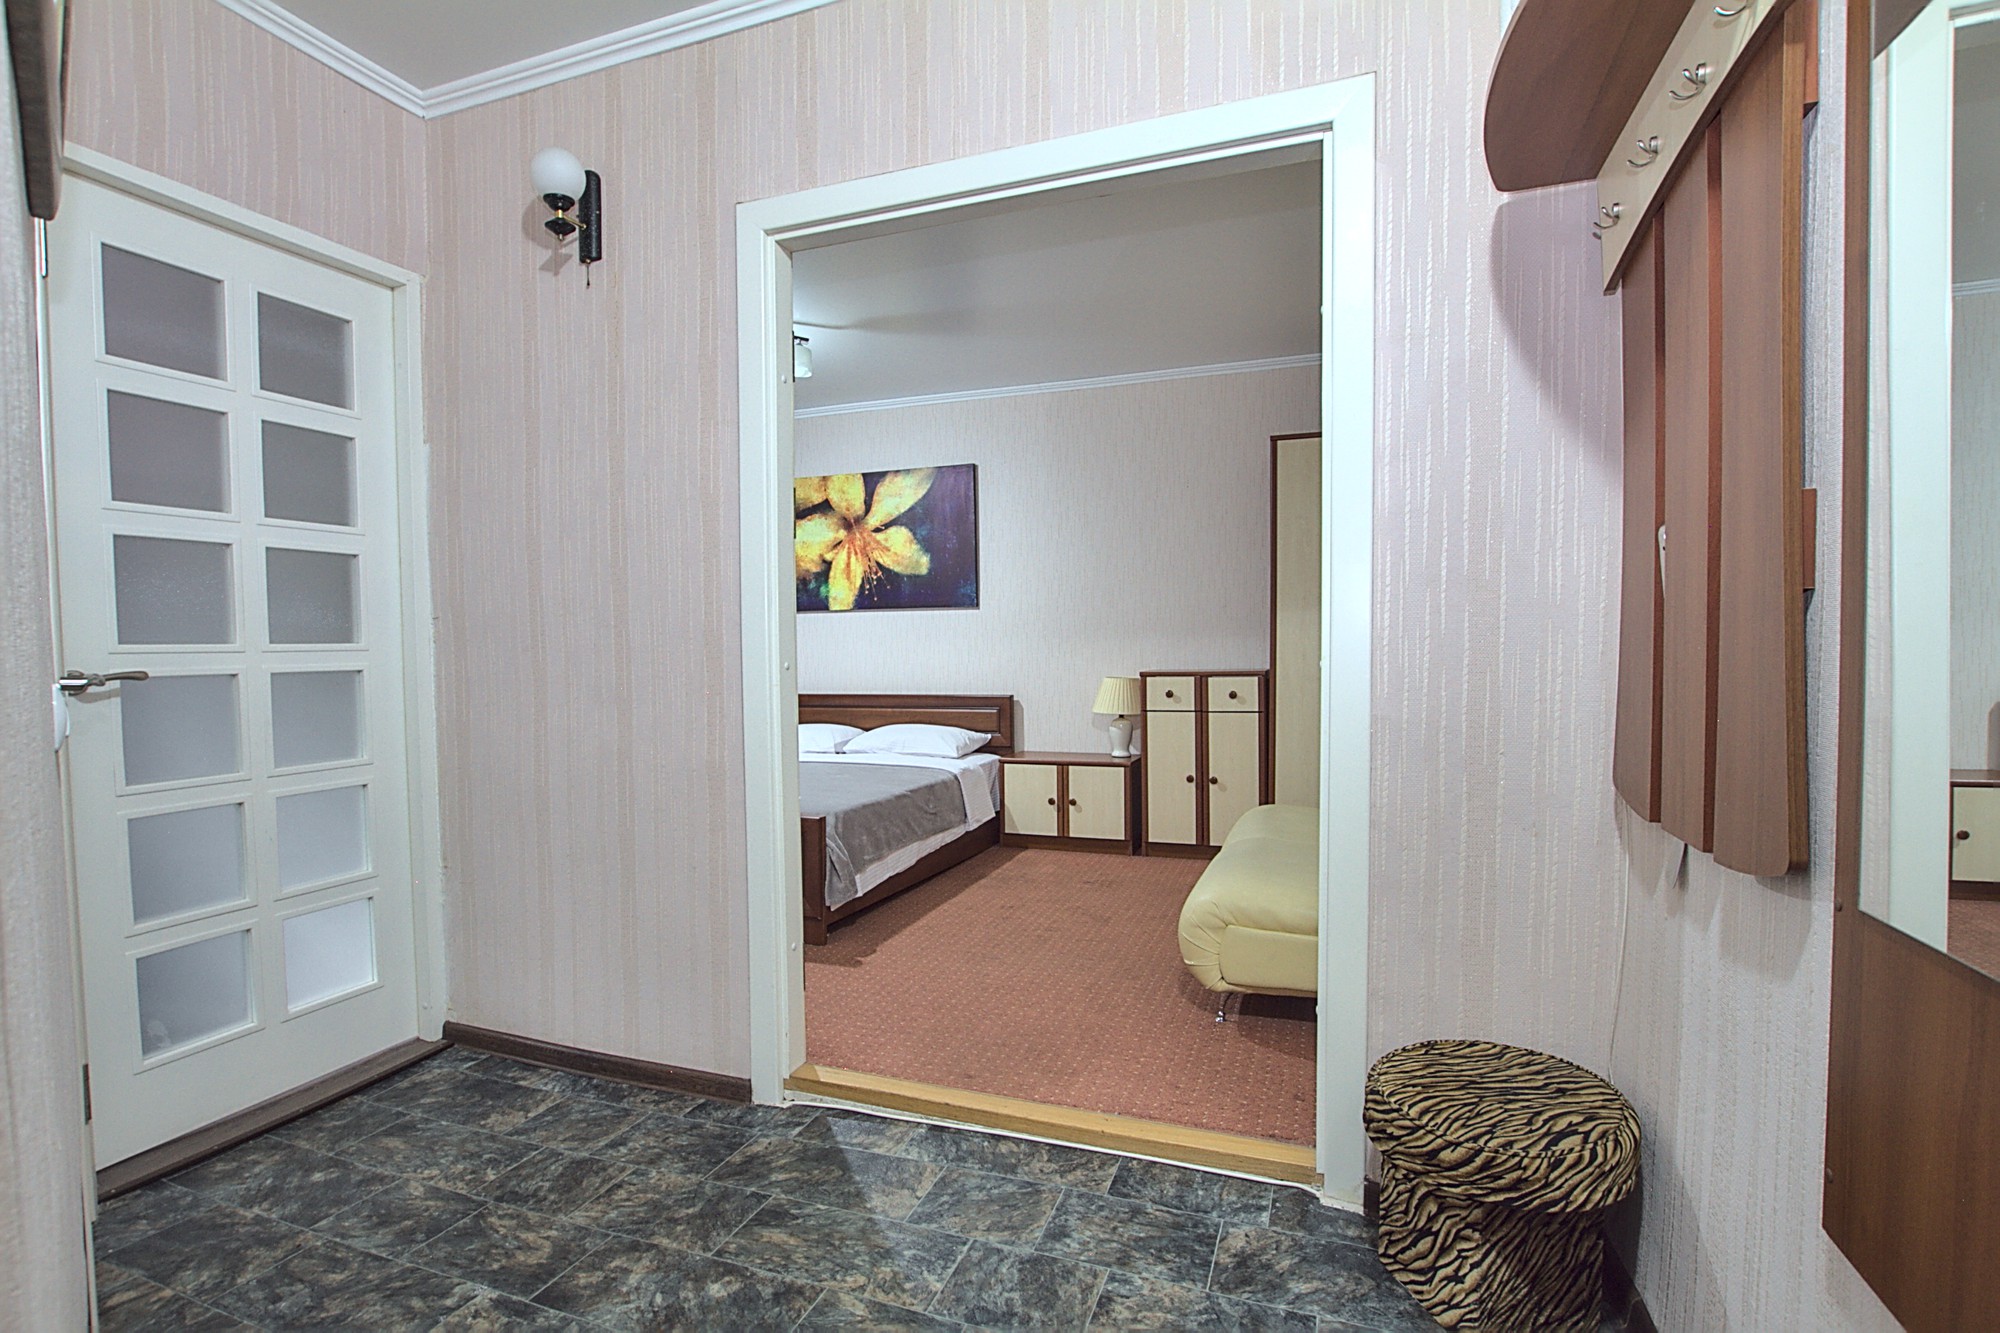 Boulevard Apartment это квартира в аренду в Кишиневе имеющая 1 комната в аренду в Кишиневе - Chisinau, Moldova